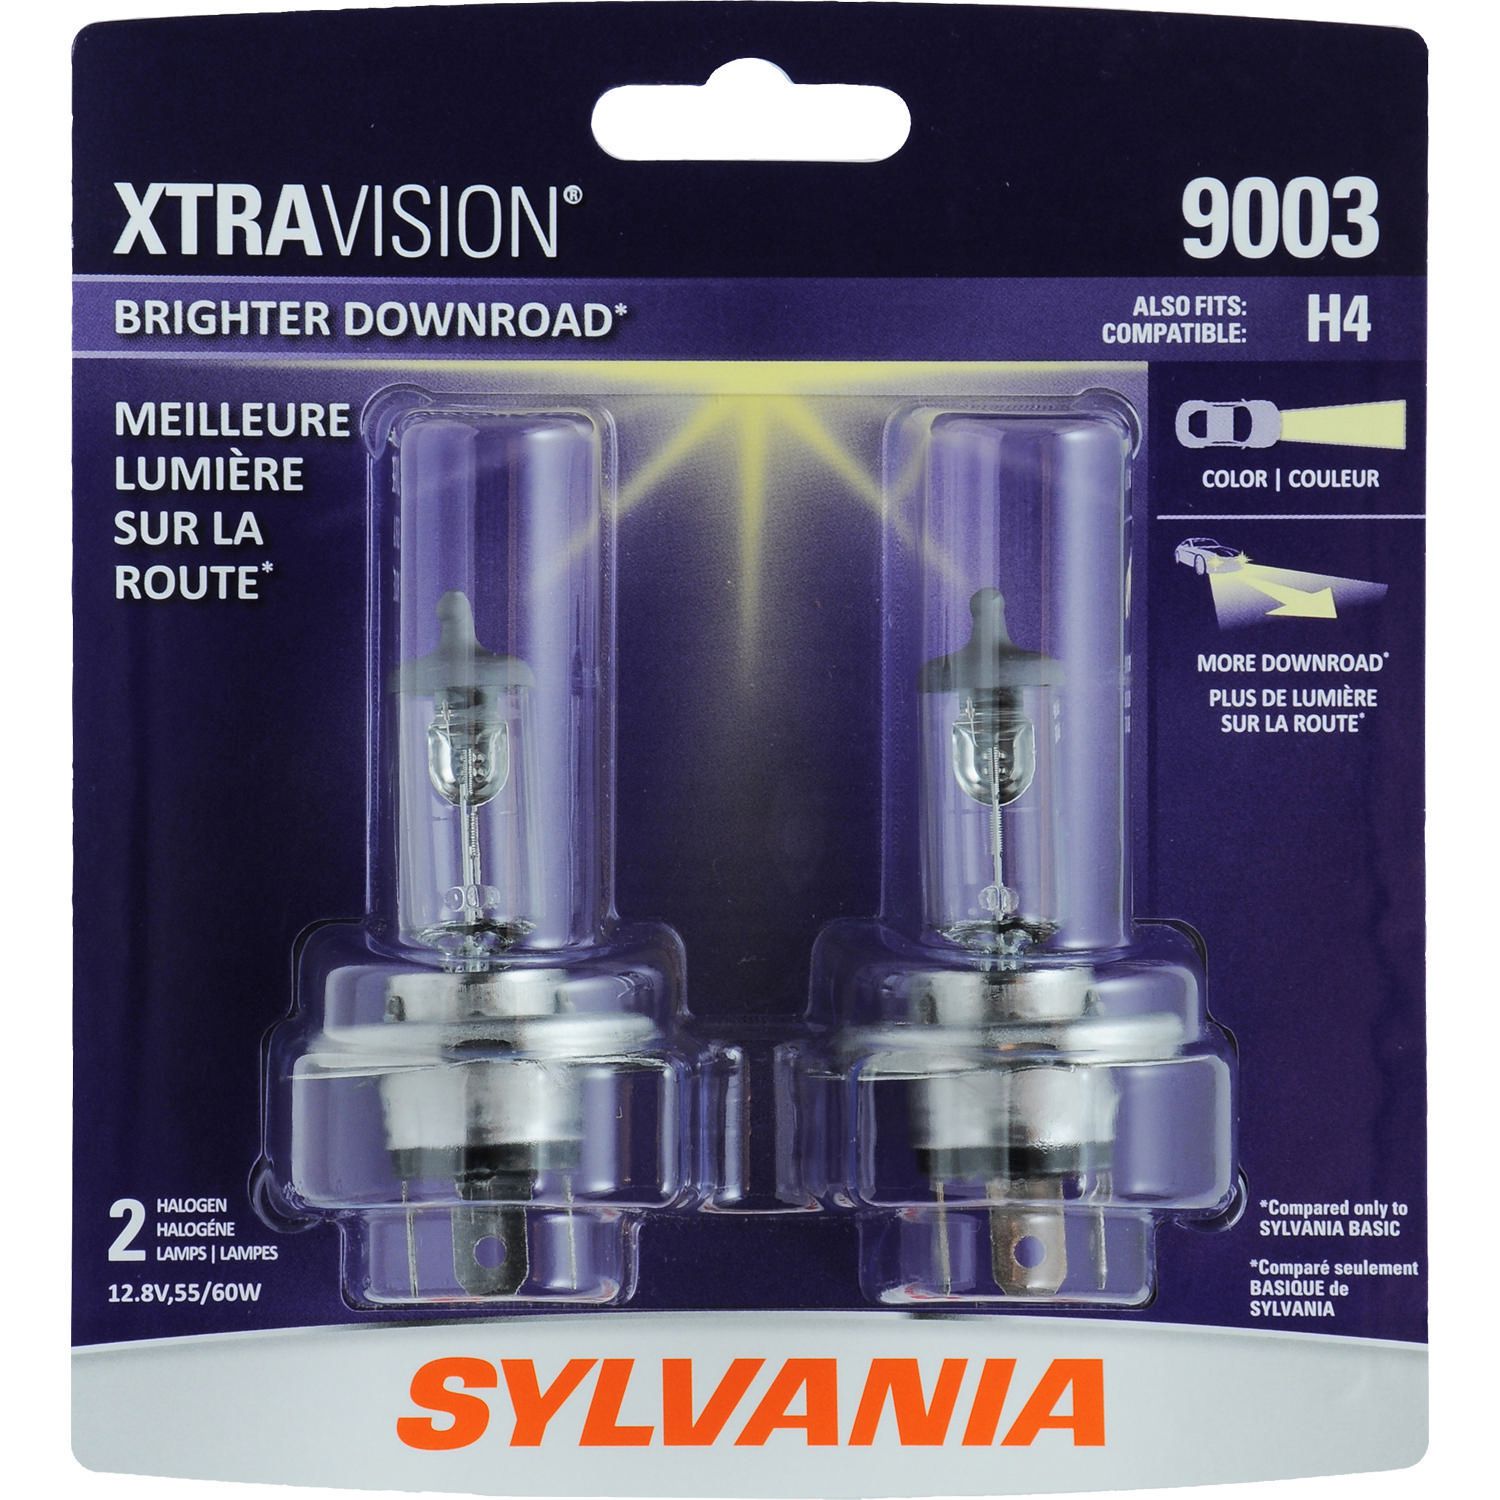 sylvania-9003-xtravision-halogen-headlight-walmart-canada